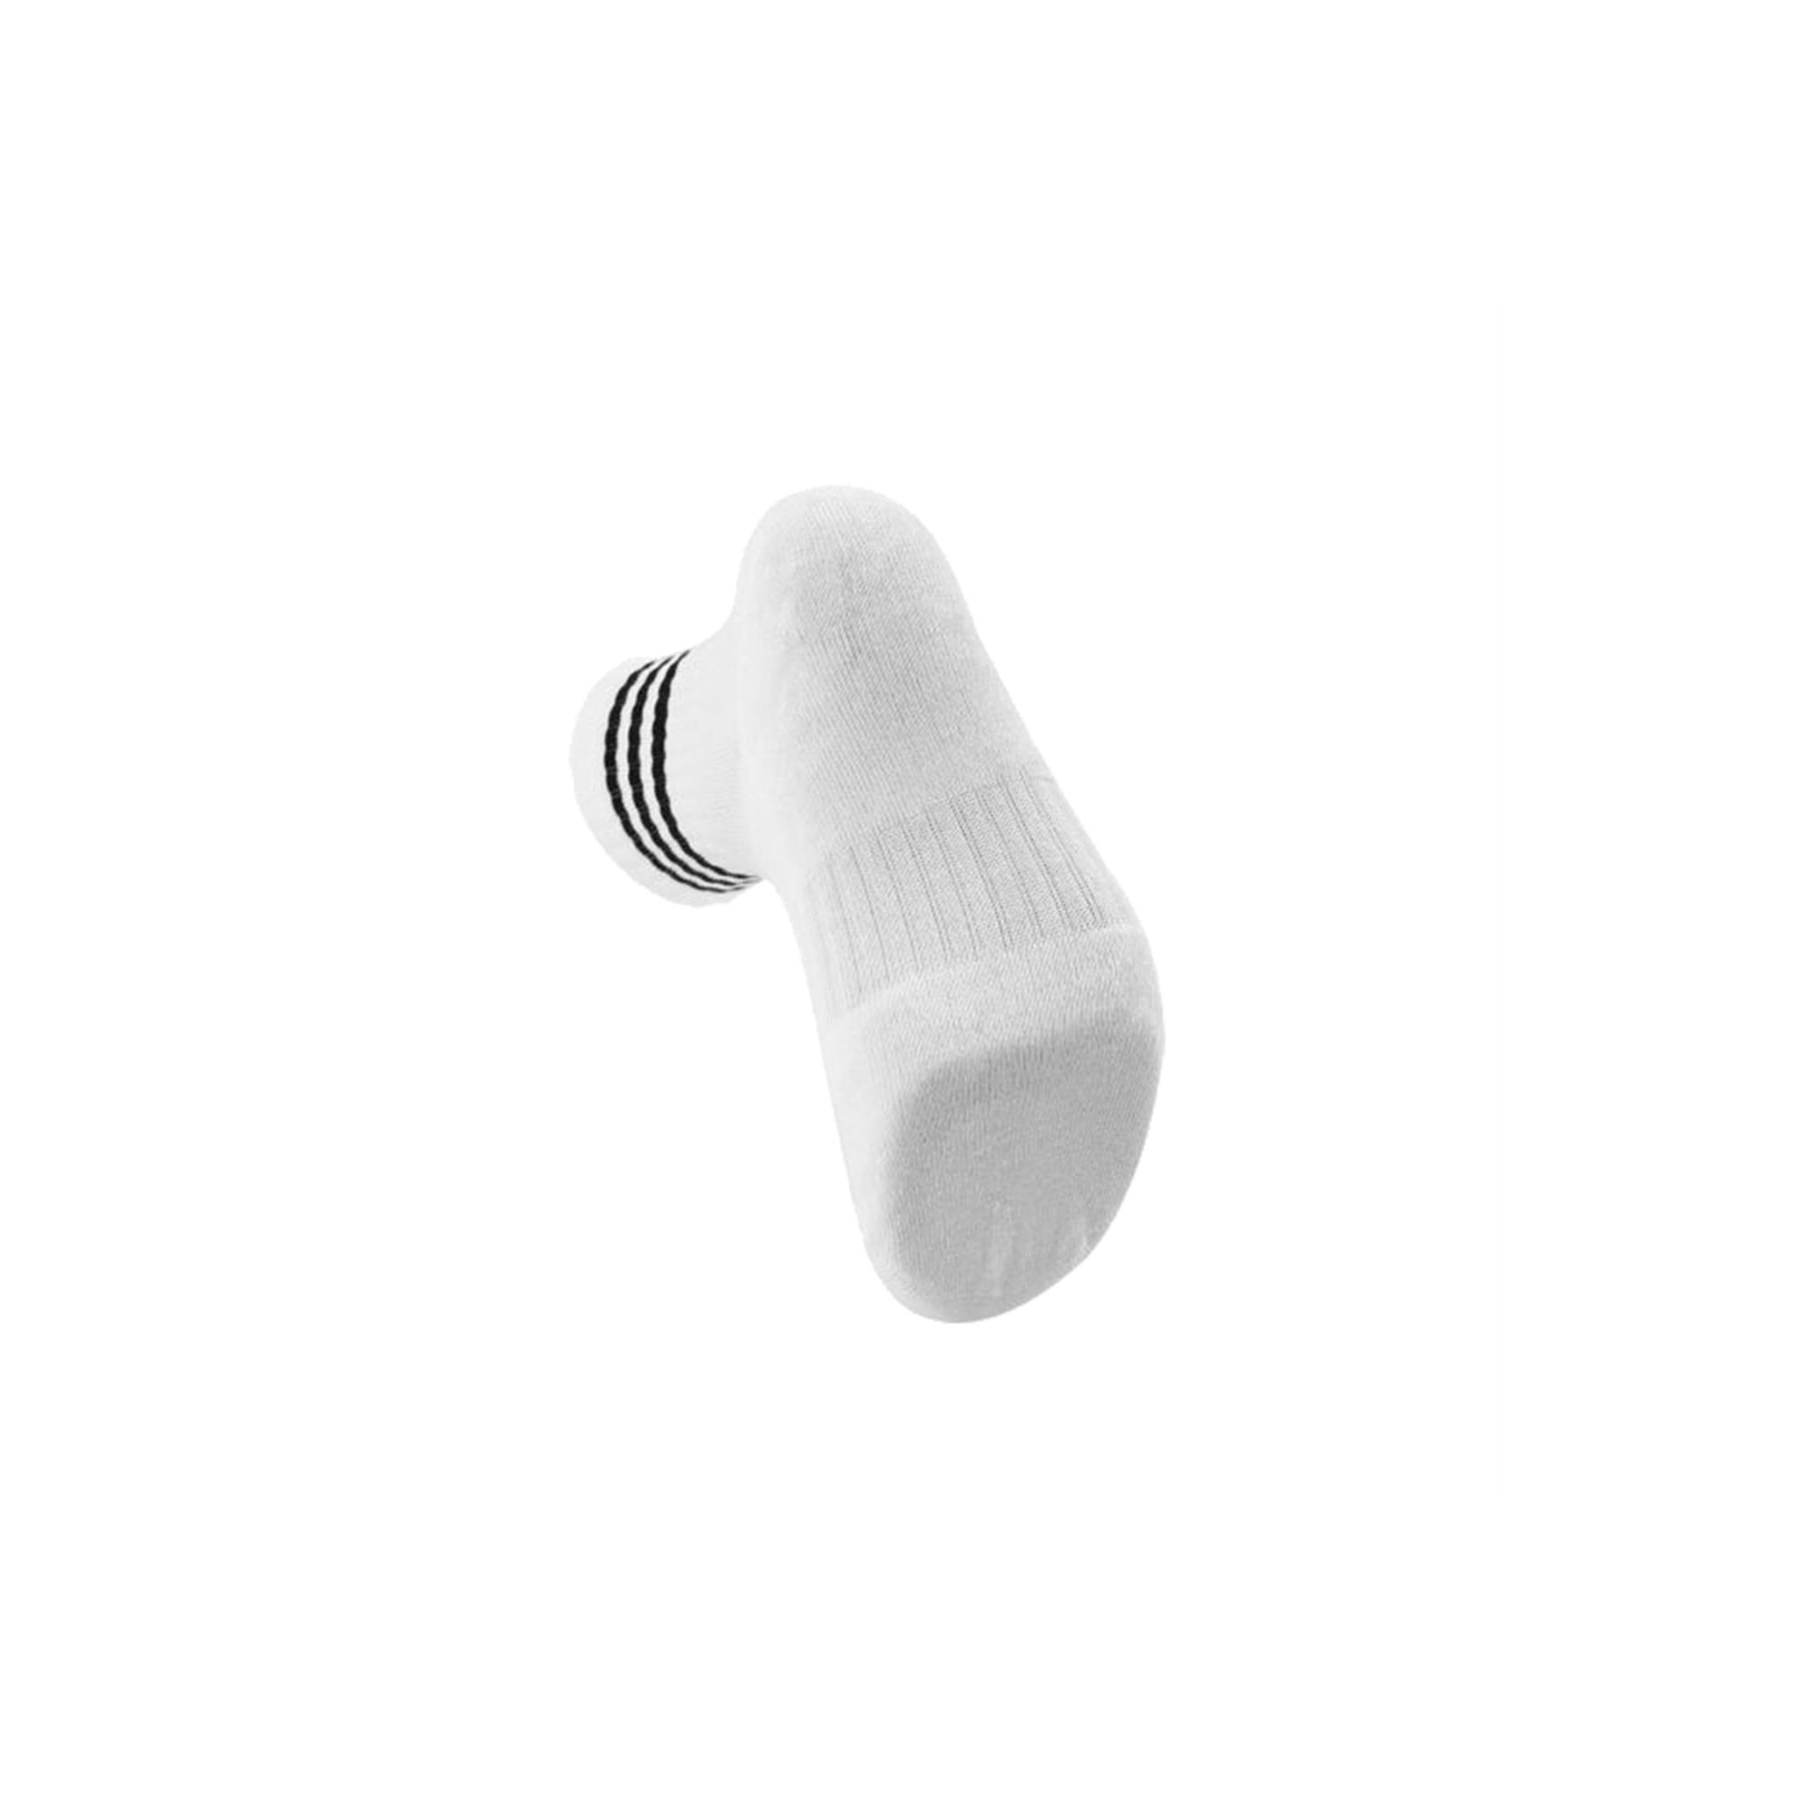 adidas 3-Stripes Bilekli Beyaz Çorap Seti (HT3458)